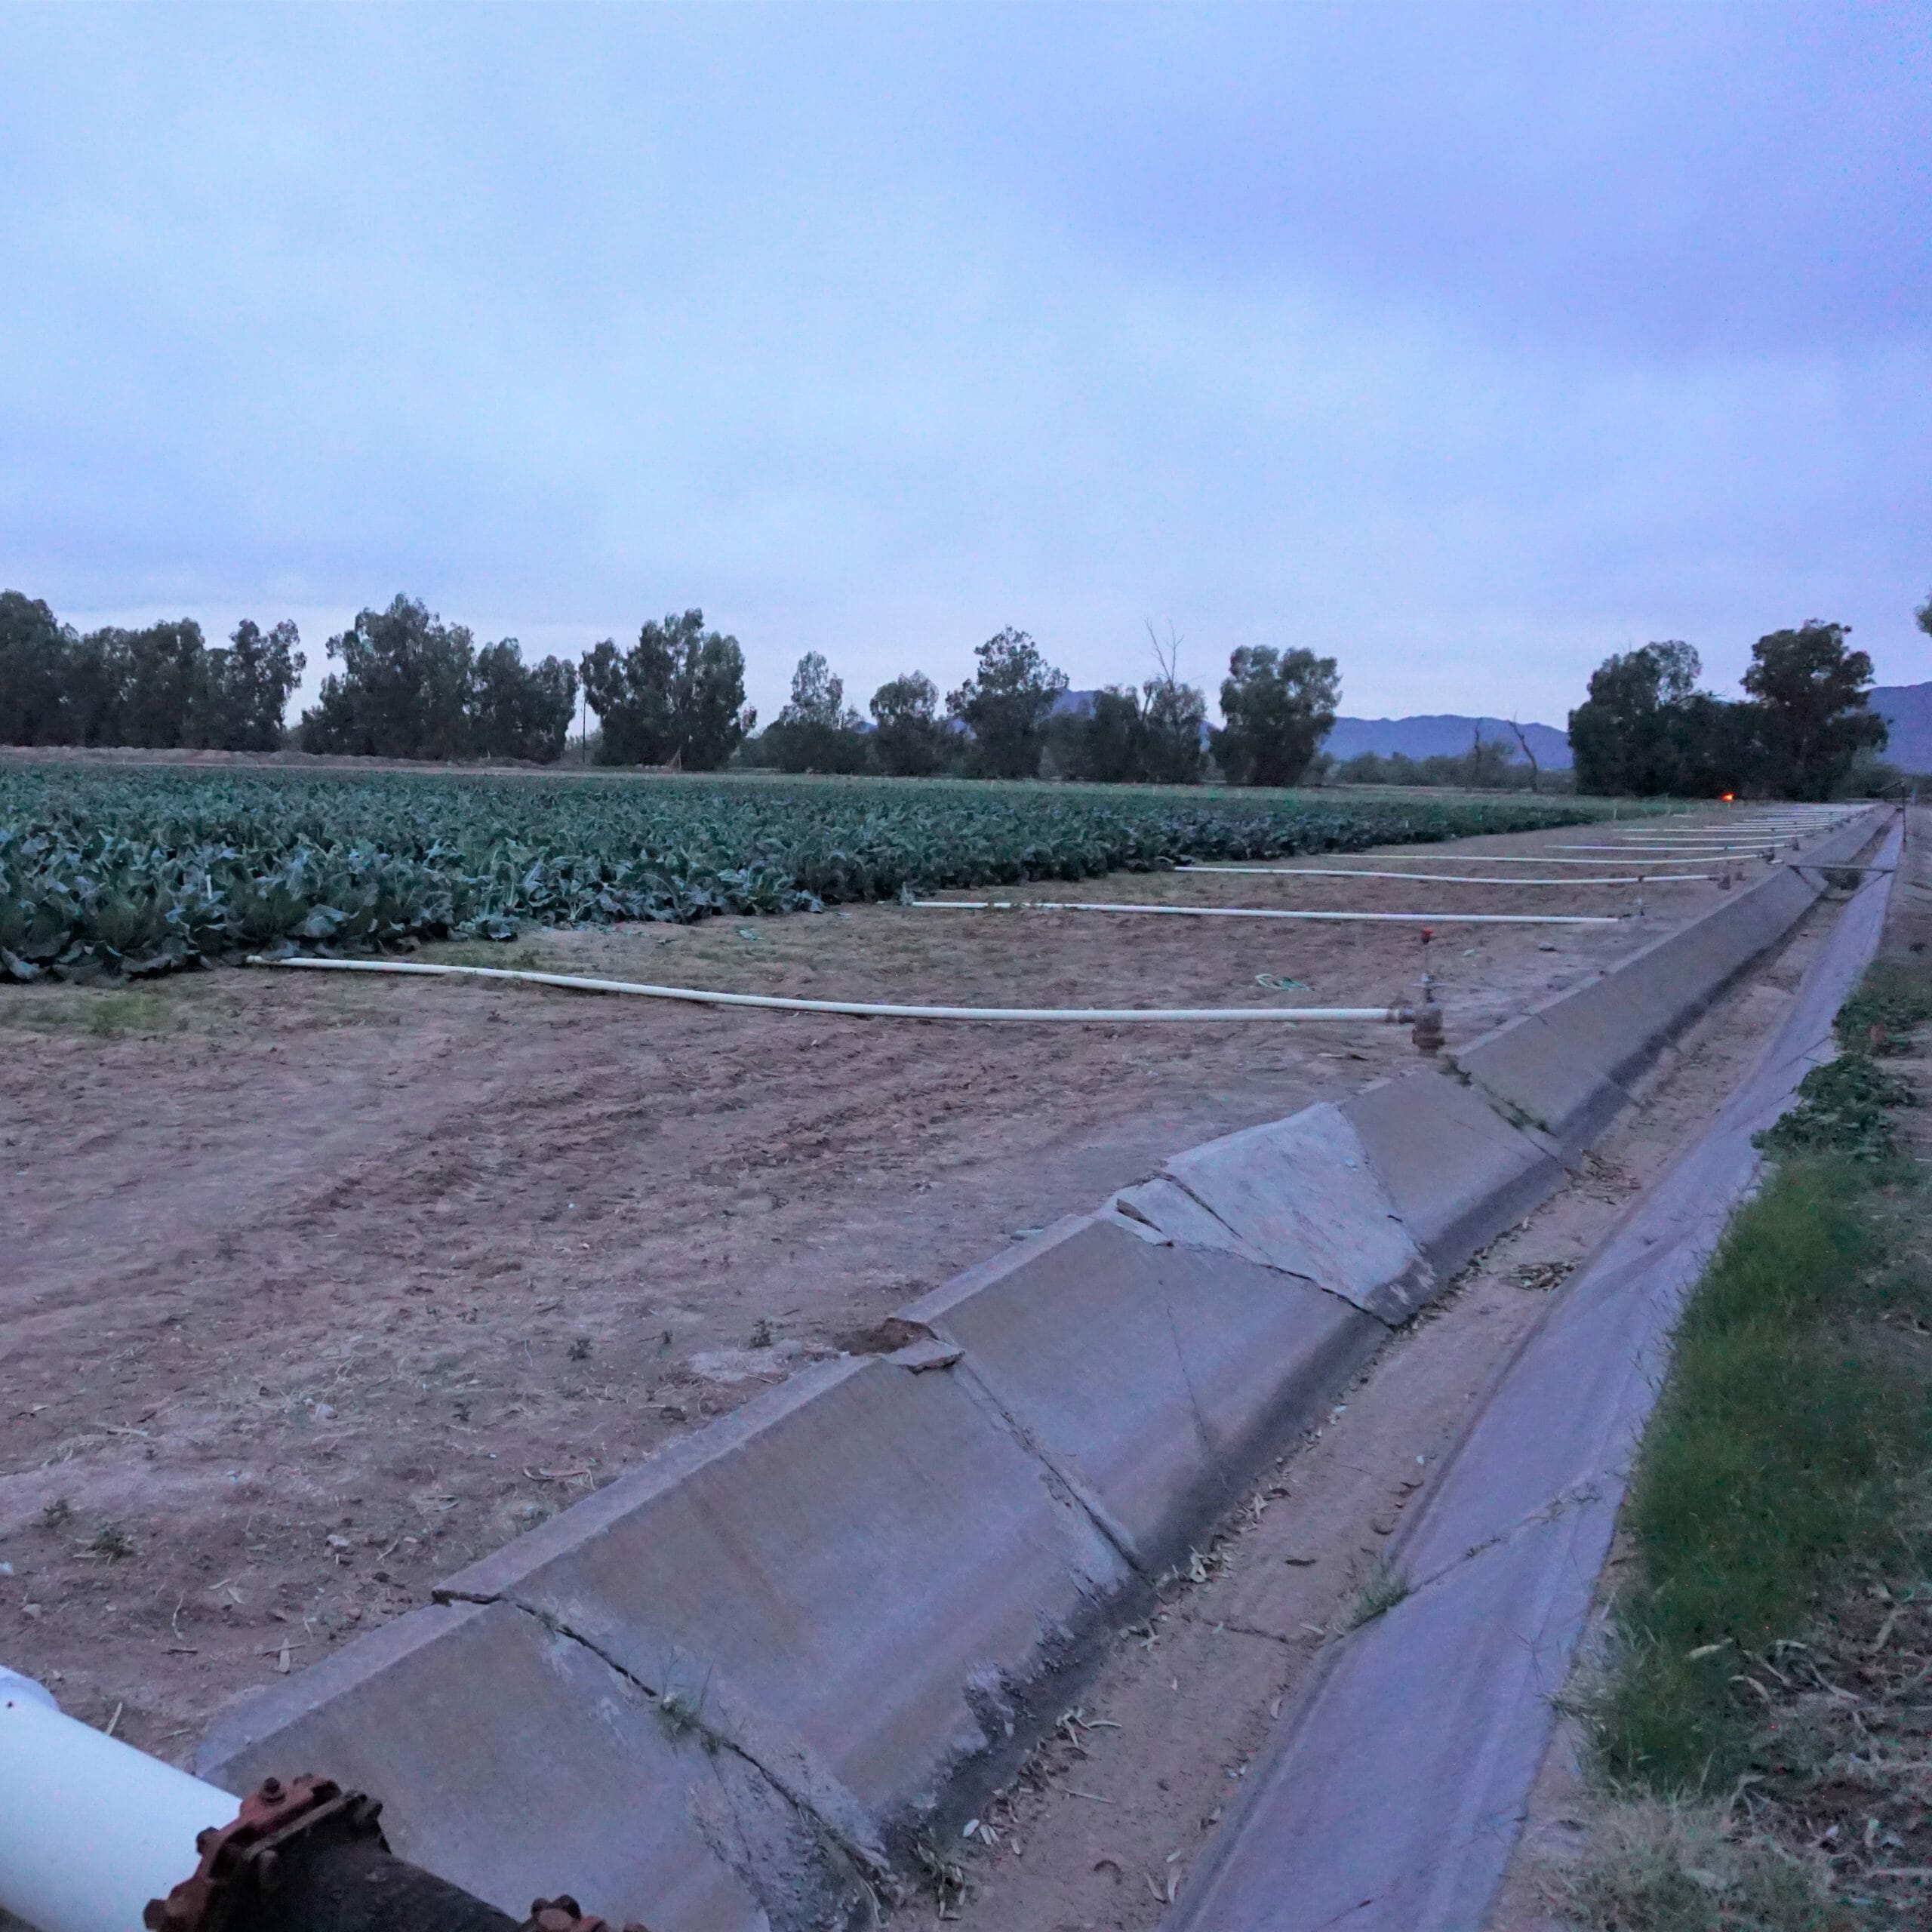 Farm field being irrigated